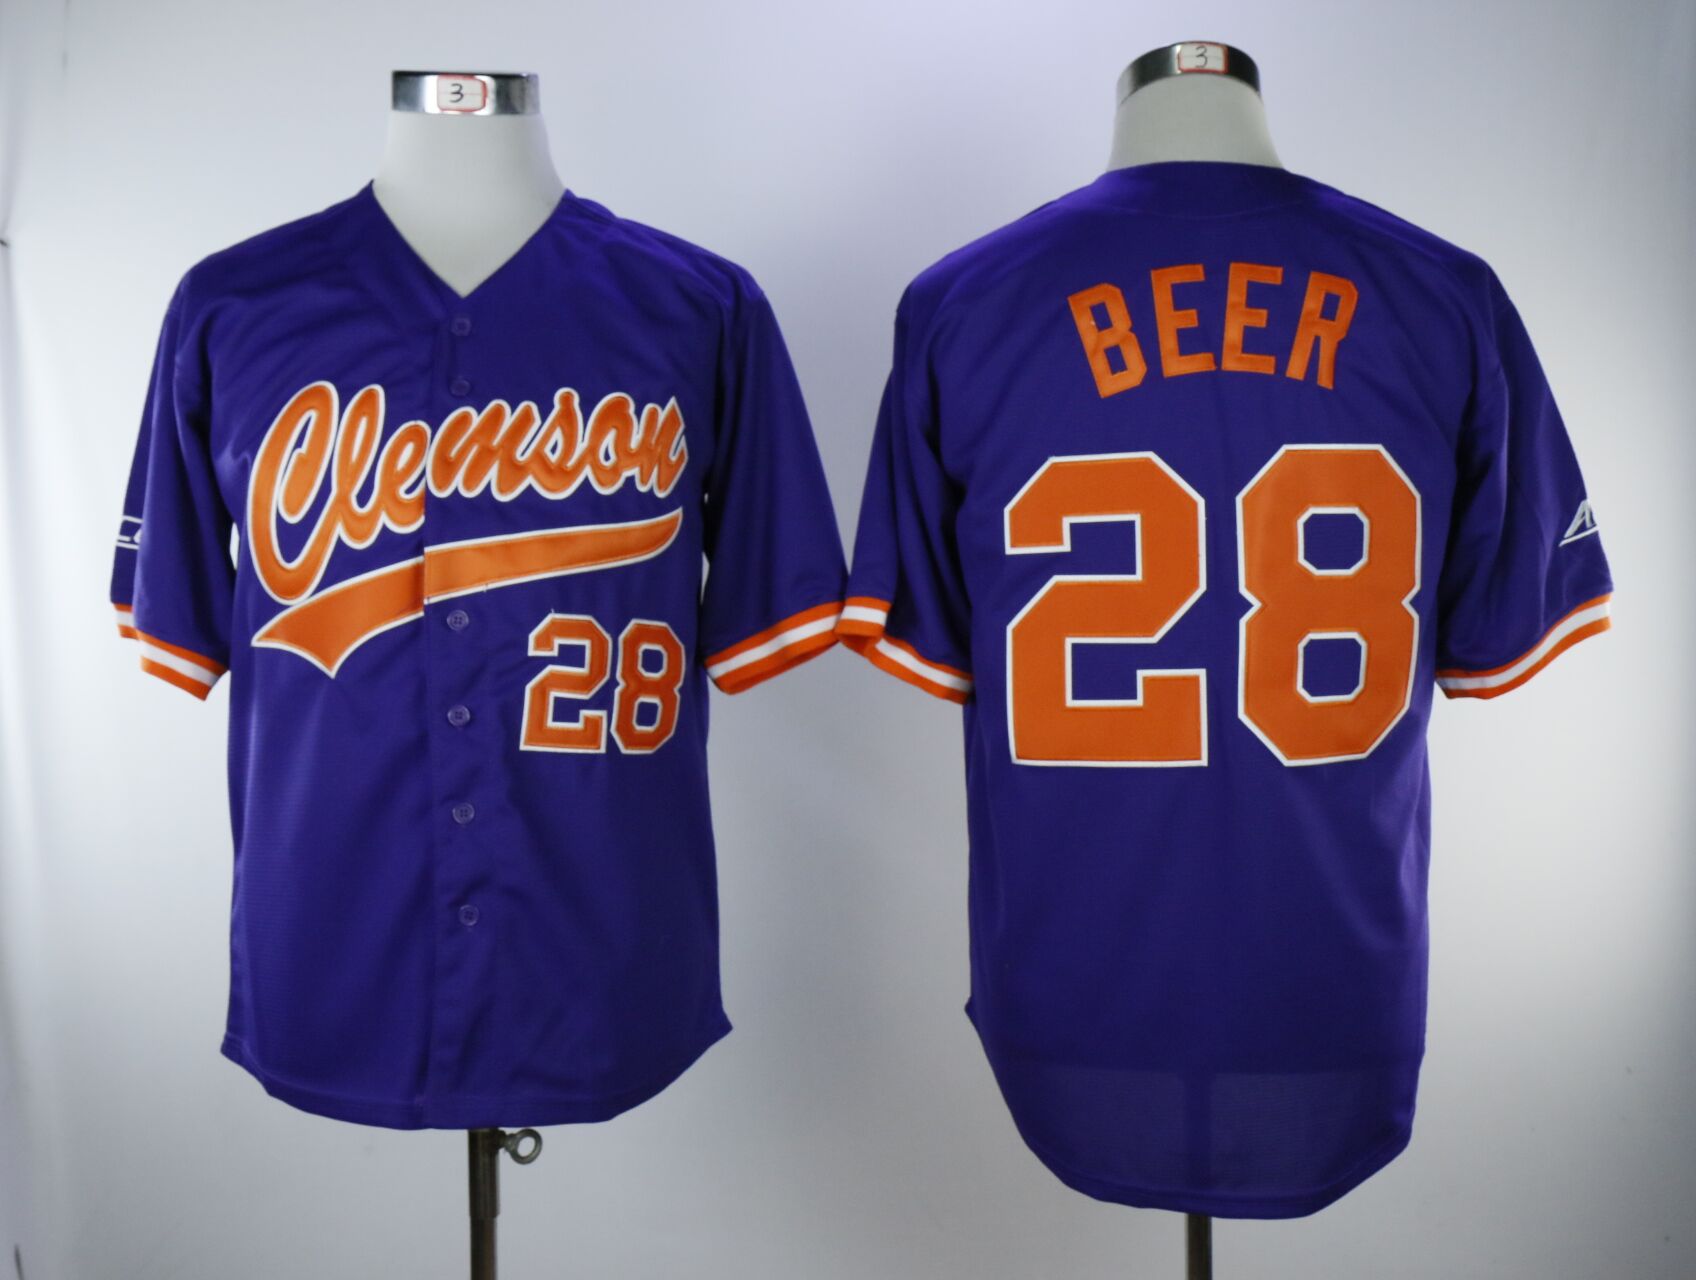 Clemson Tigers 28 Seth Beer Purple College Baseball Jersey